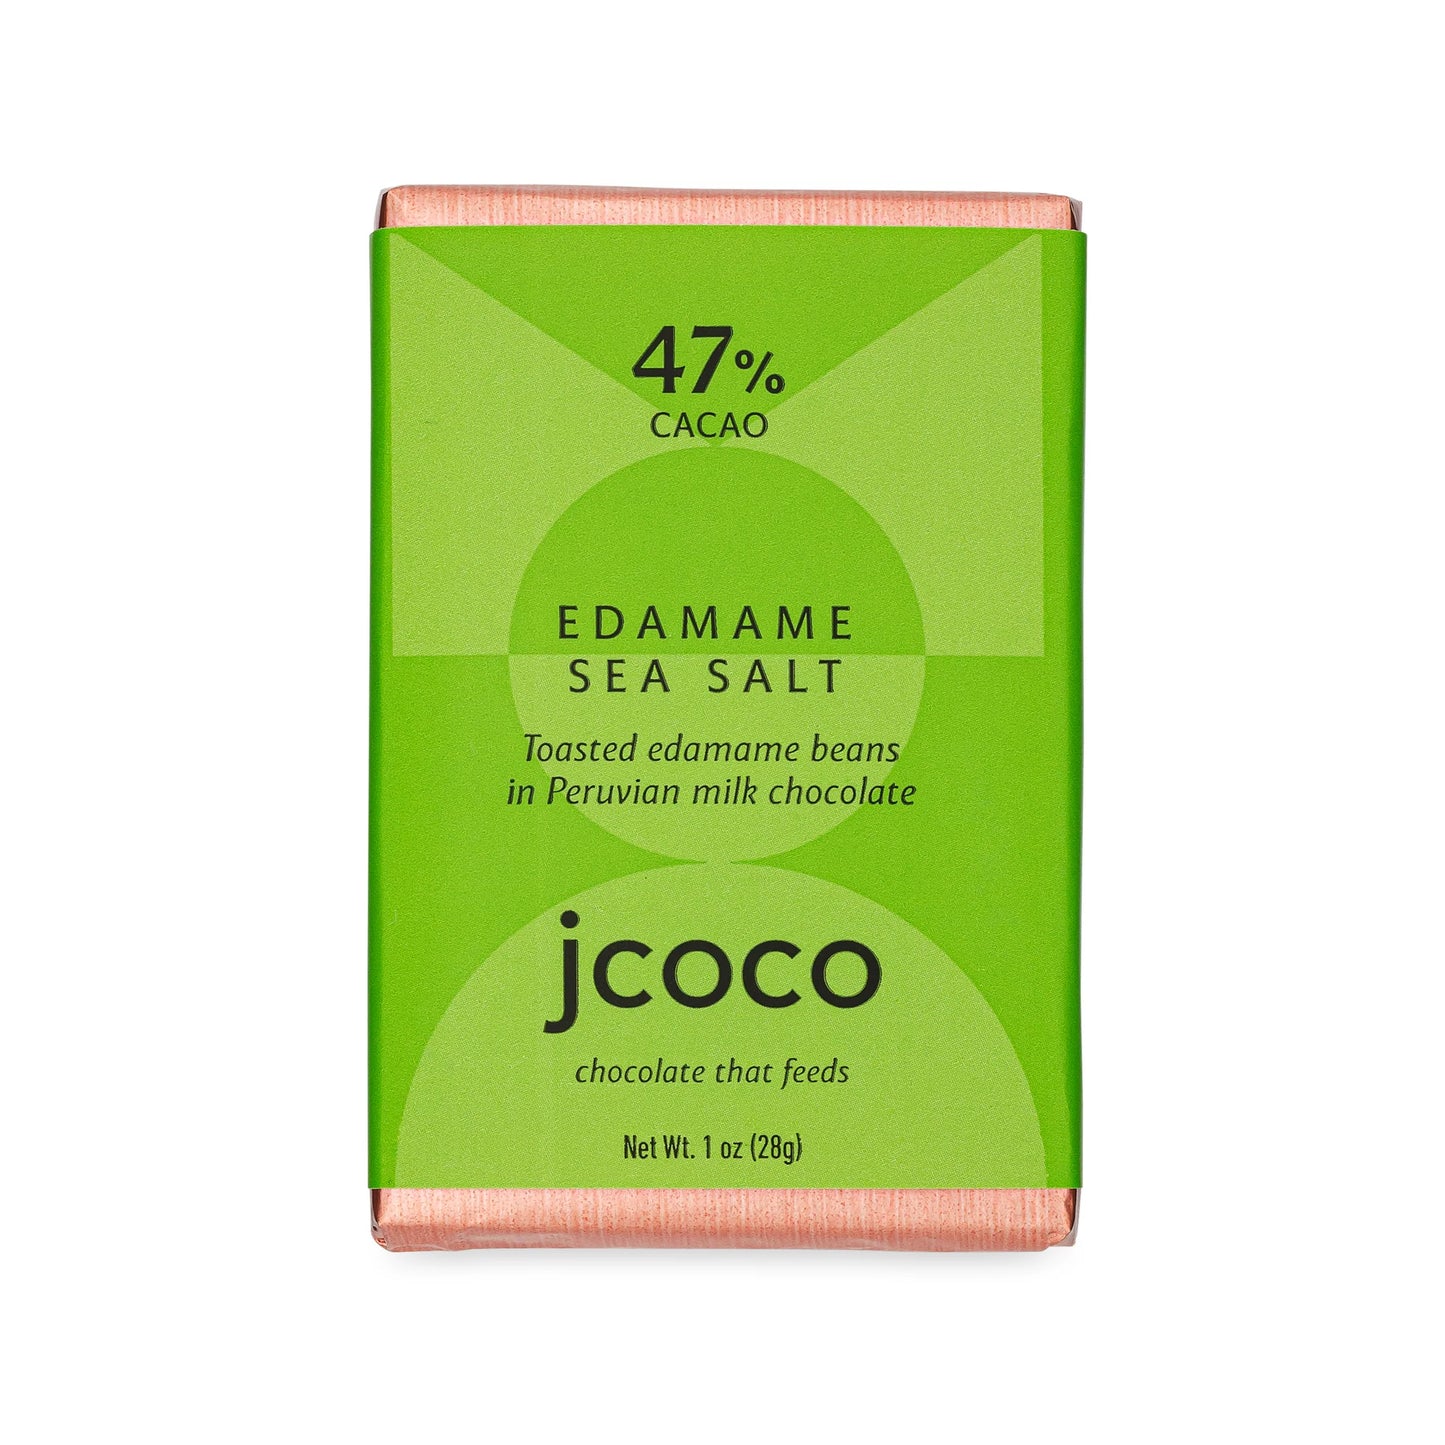 Jcoco - Edemame Sea Salt (1oz)